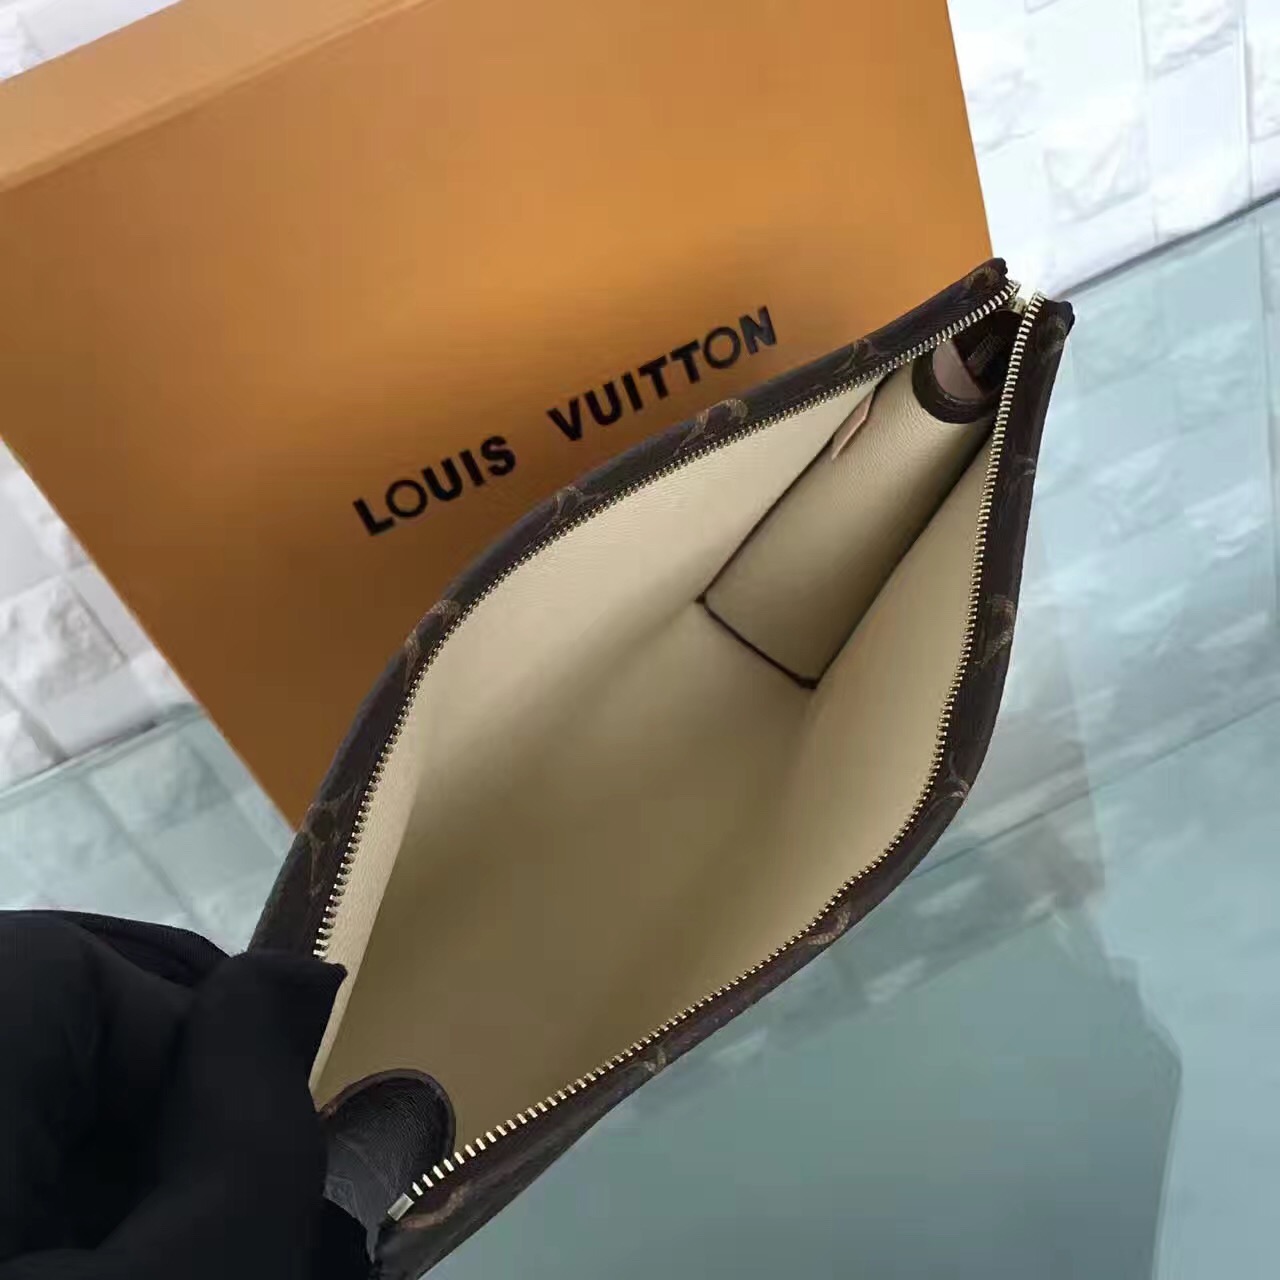 LV Louis Vuitton monogram clutch handbags